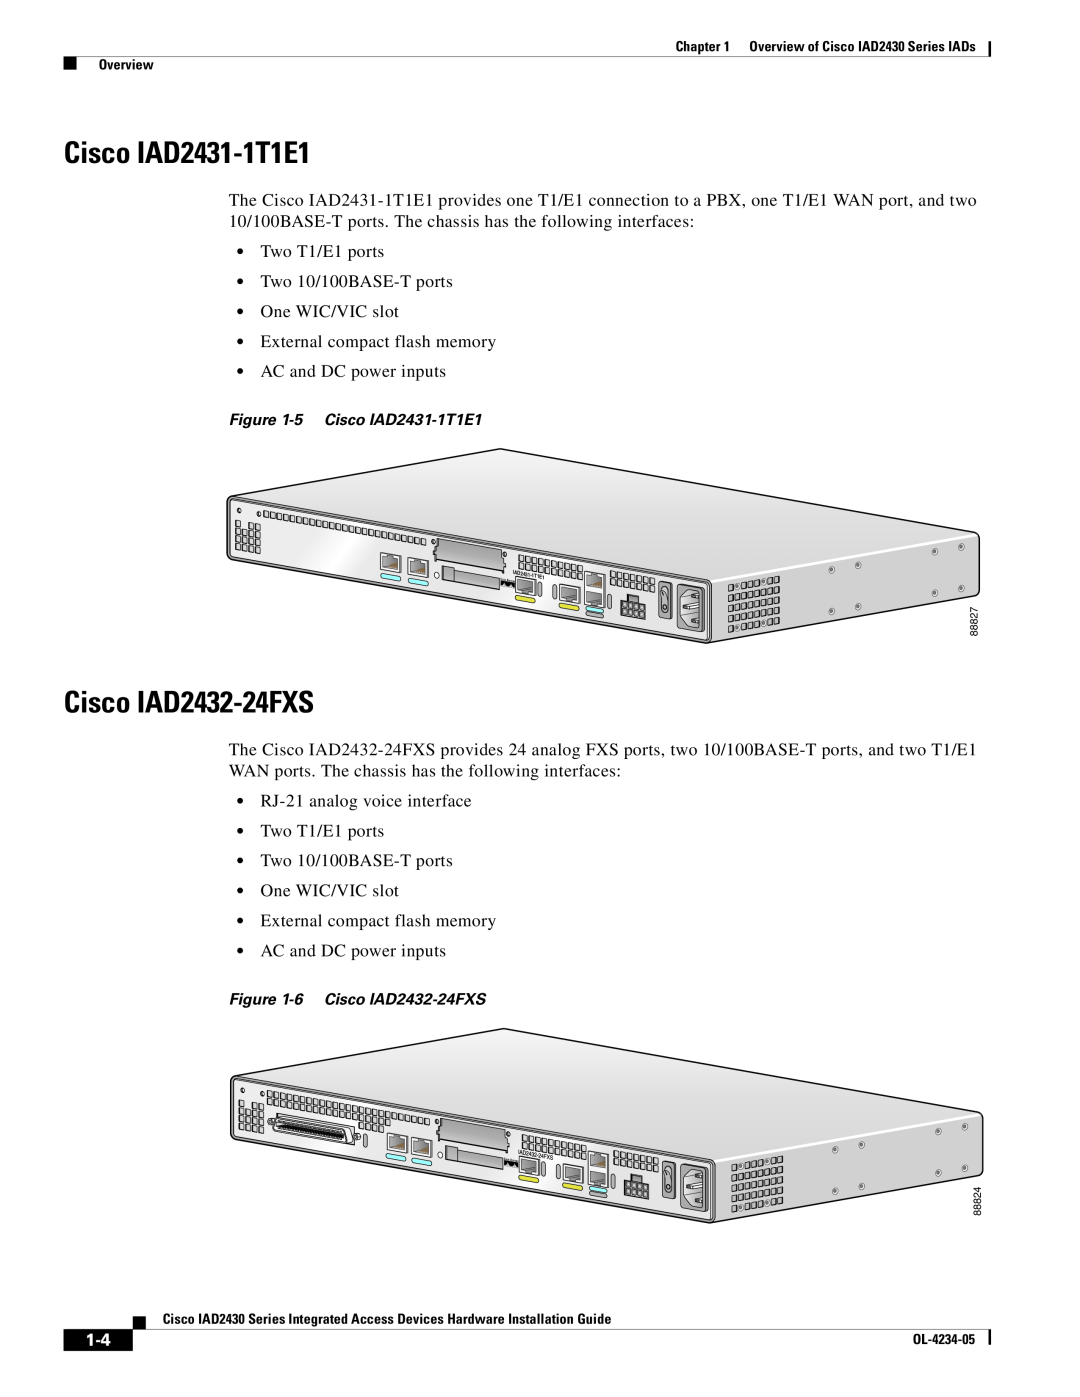 Cisco Systems IAD2430 Series specifications 5 Cisco IAD2431-1T1E1, 6 Cisco IAD2432-24FXS 